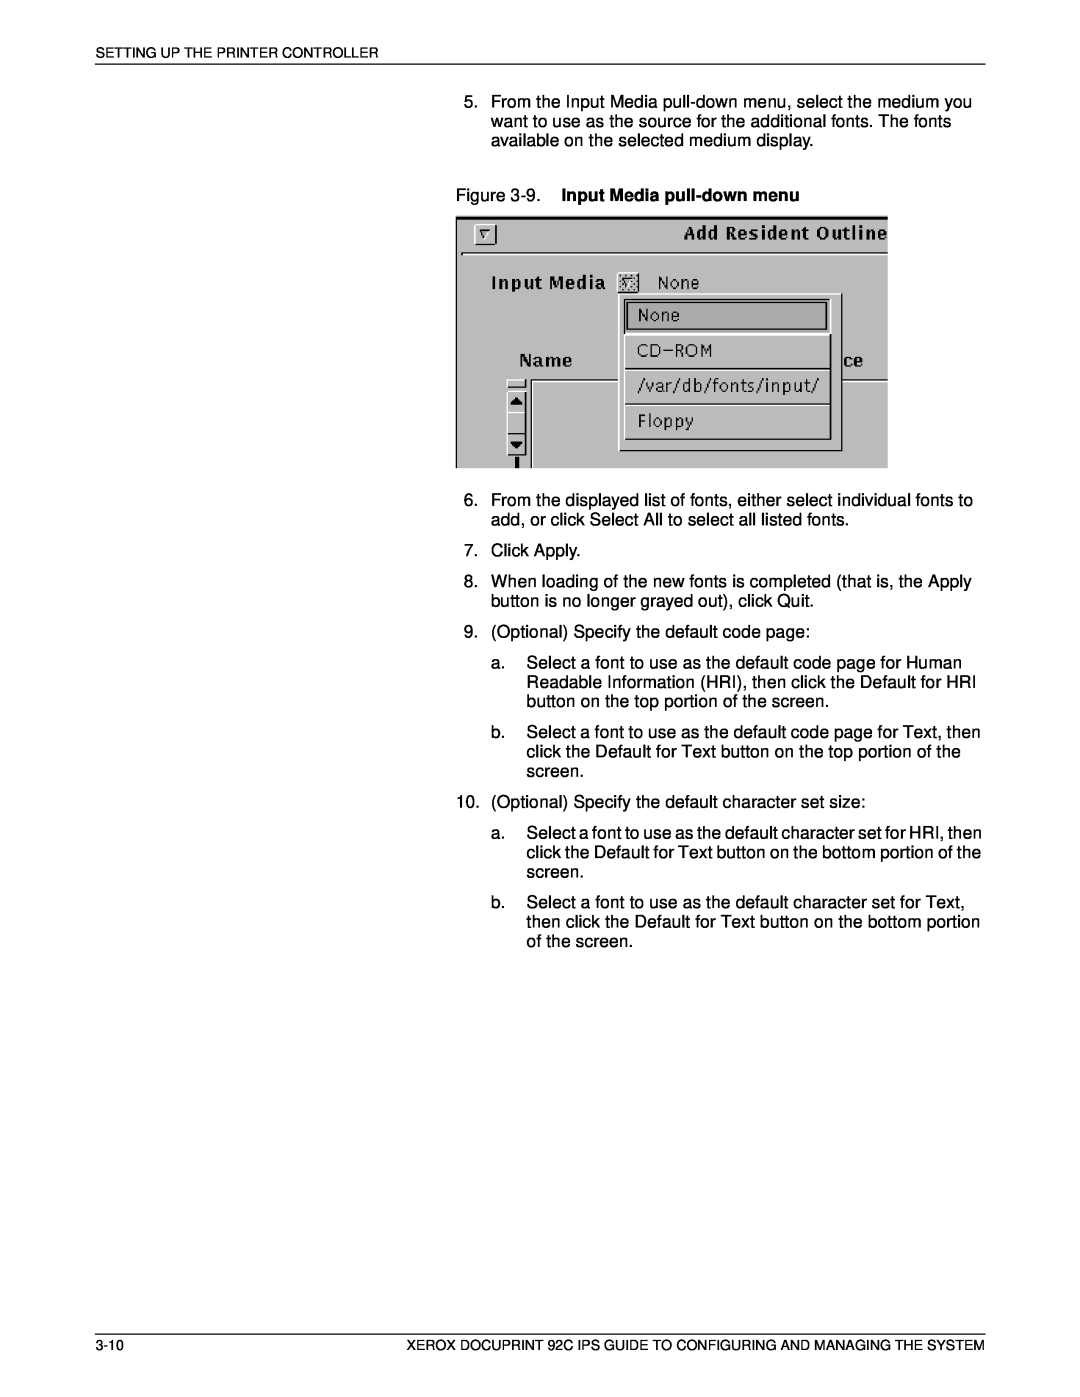 Xerox 92C IPS manual 9. Input Media pull-down menu 